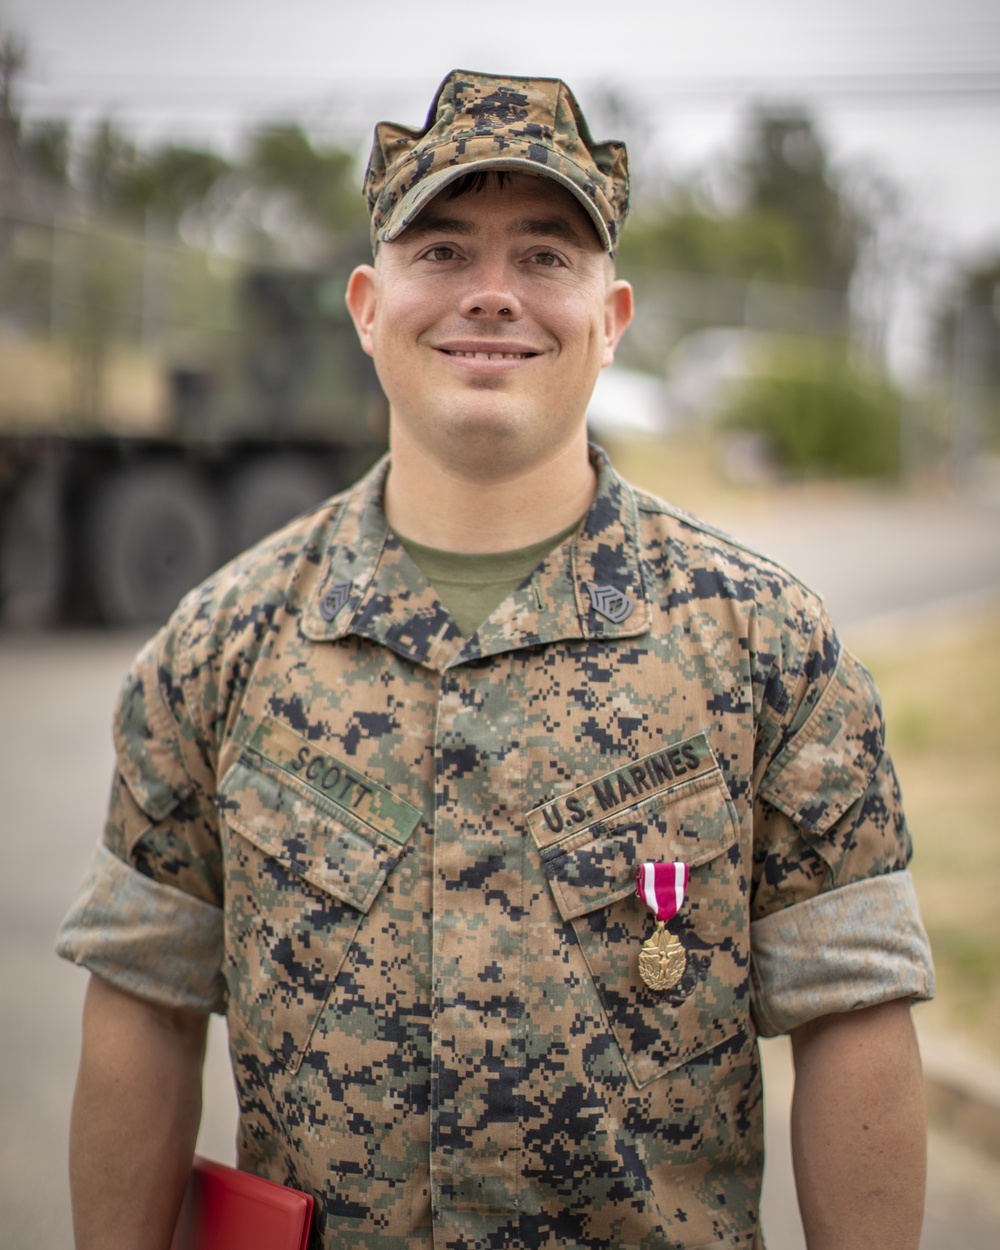 I MIG Marine Receives Meritorious Service Medal